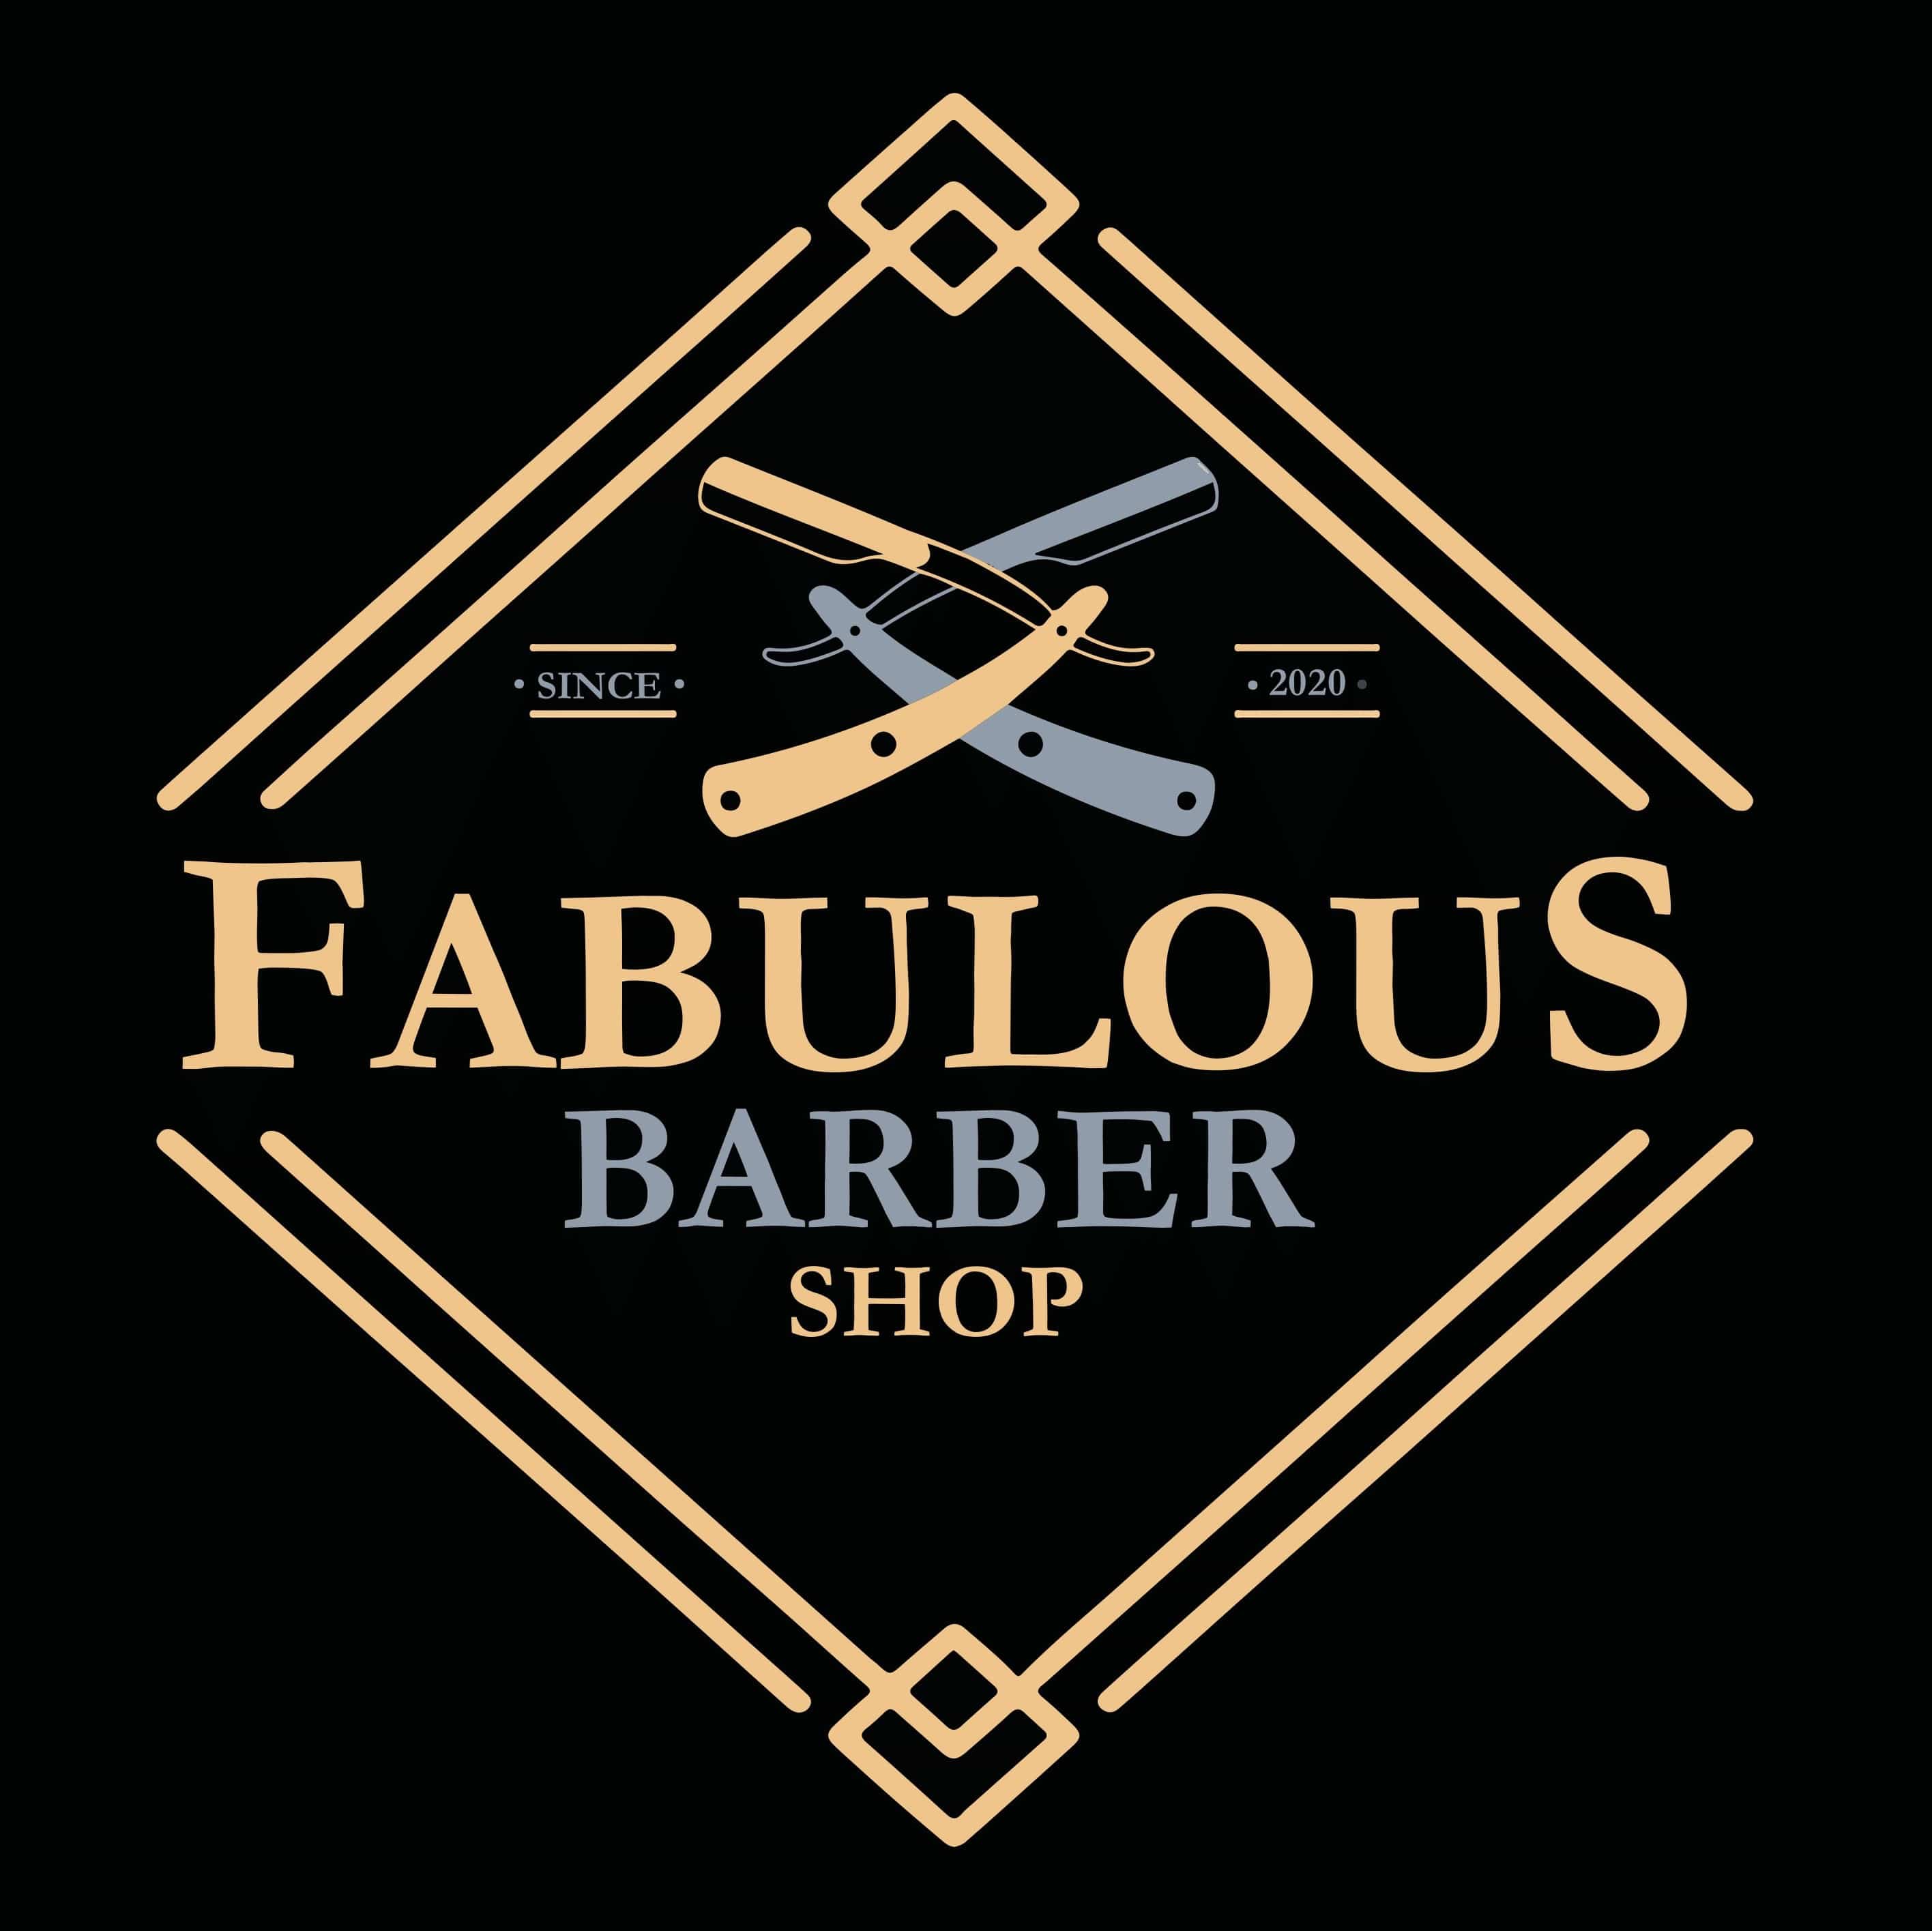 Fabulous Barbershop Logo In Banner